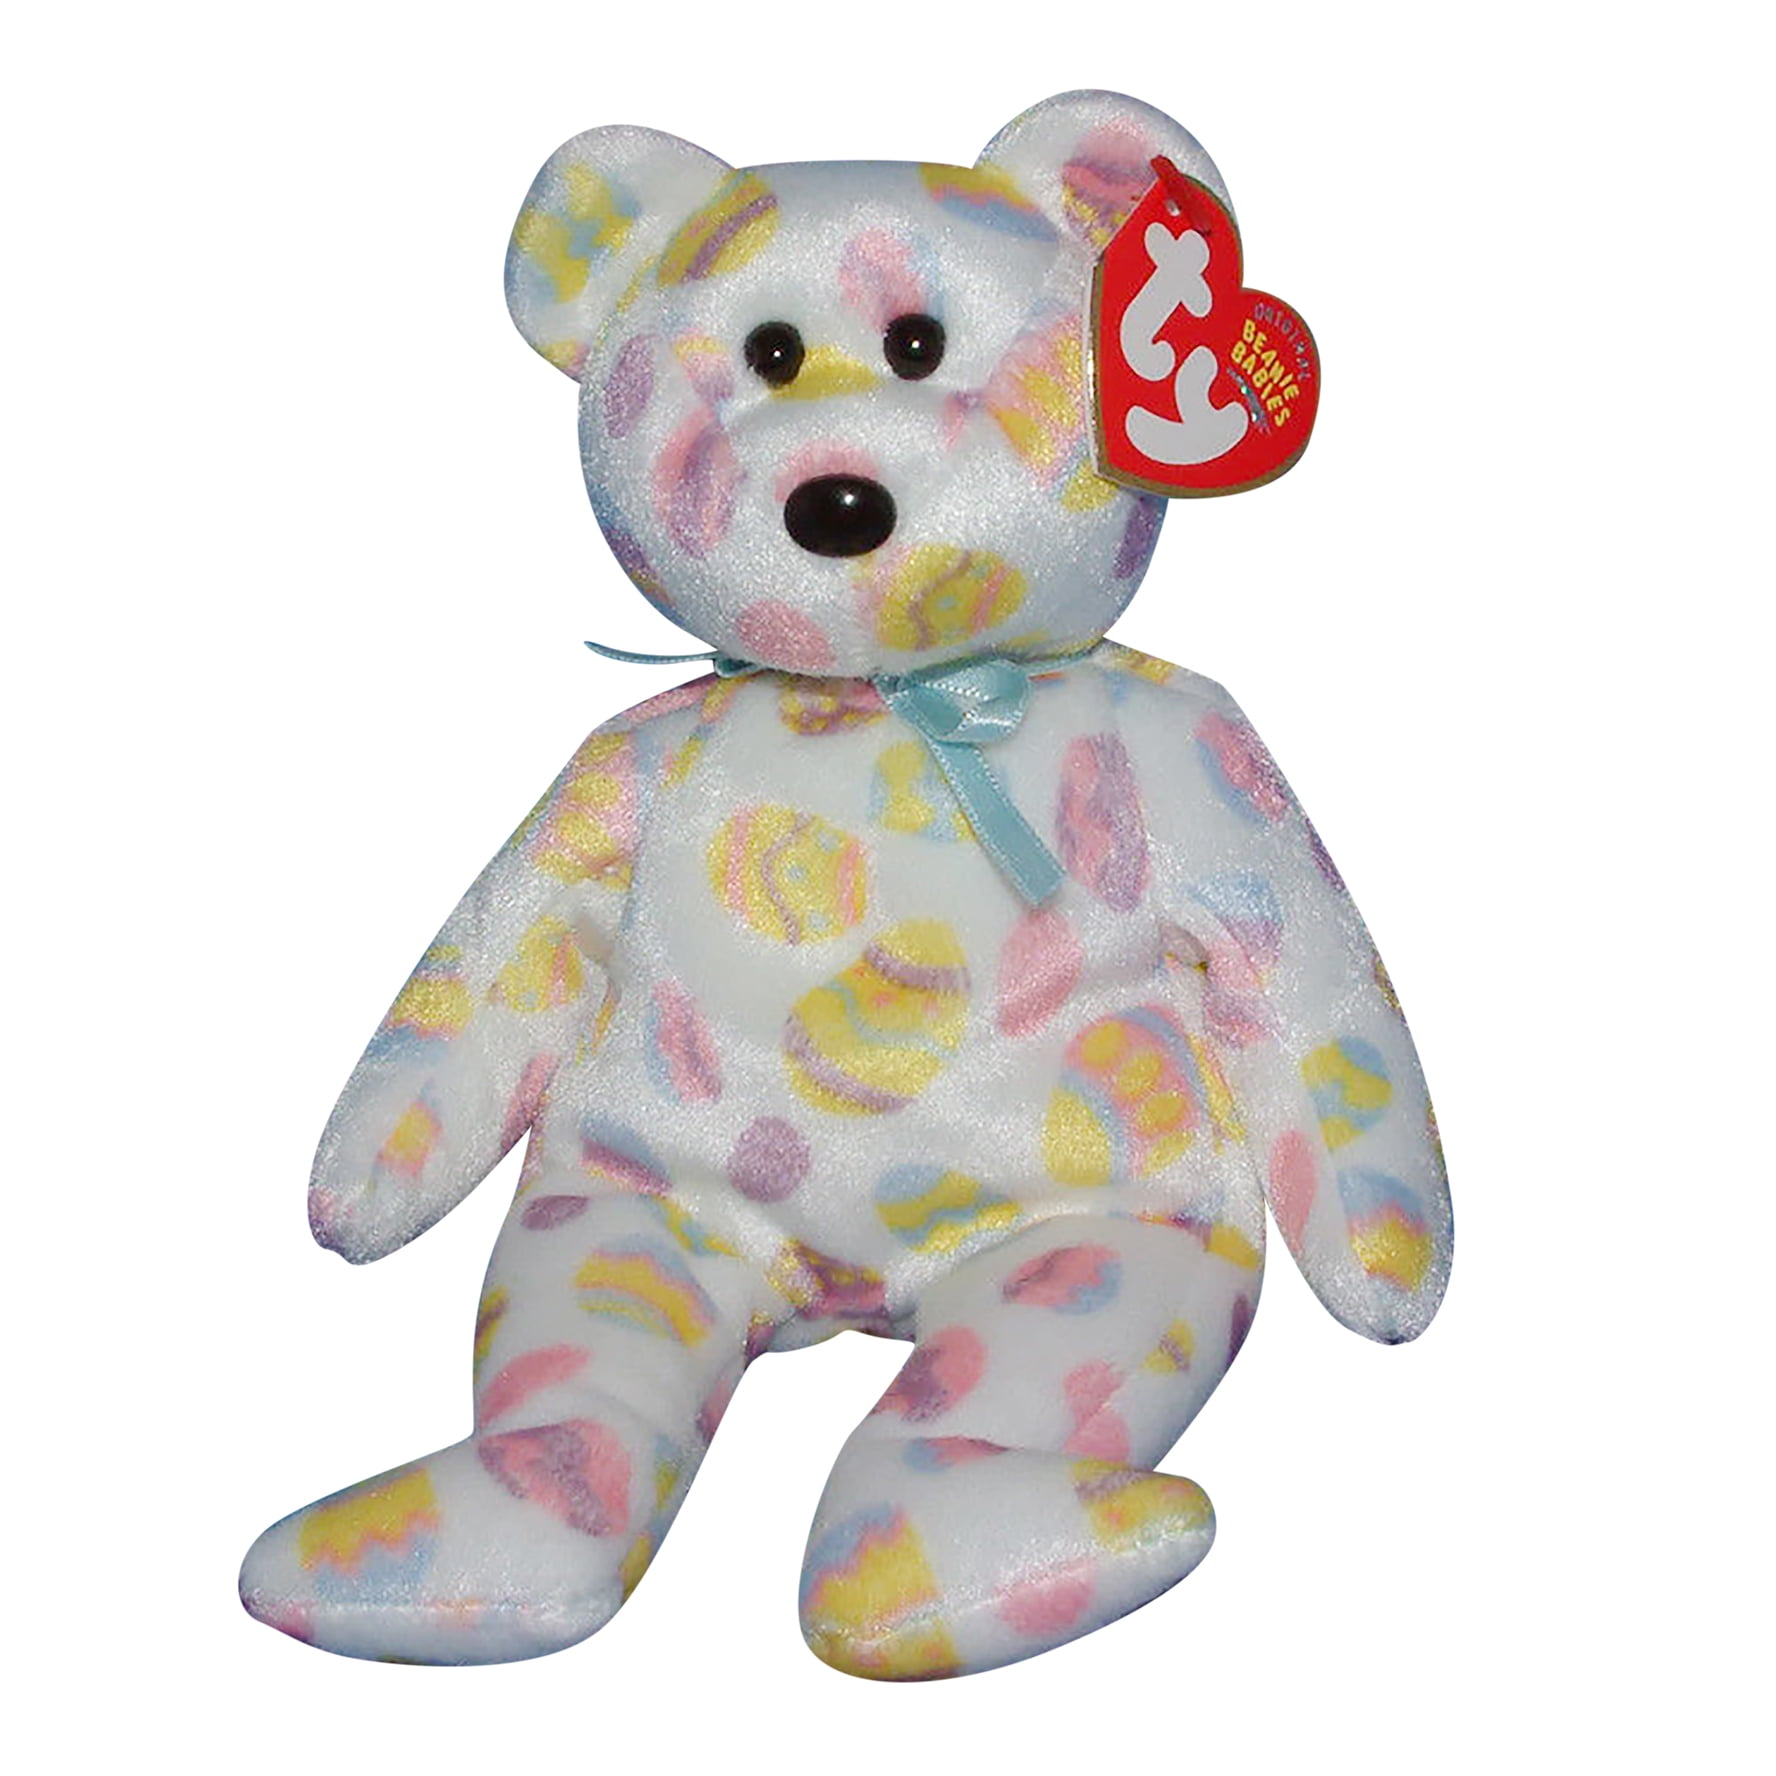 Ty Beanie Baby: Eggs 2004 the Bear | Stuffed Animal | MWMT - Walmart.com